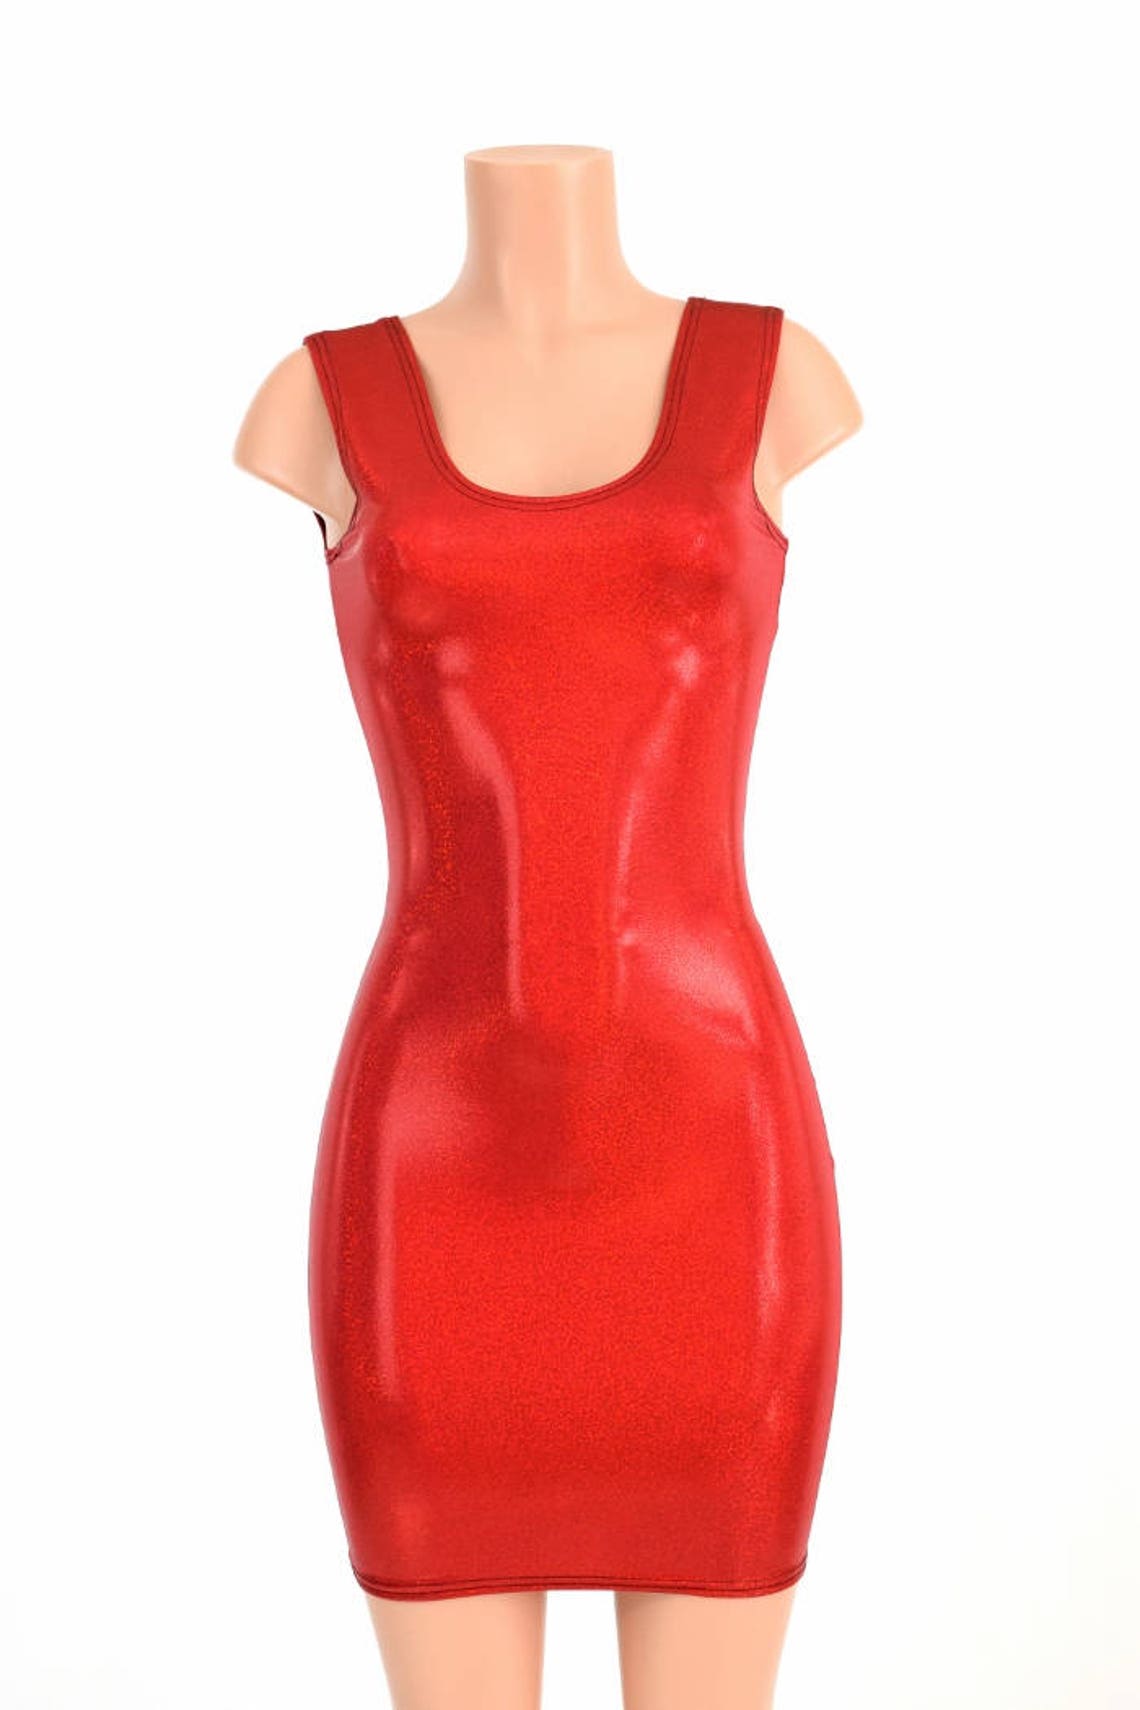 Red Metallic Tank Dress Bodycon Lycra Spandex Clubwear Dress | Etsy